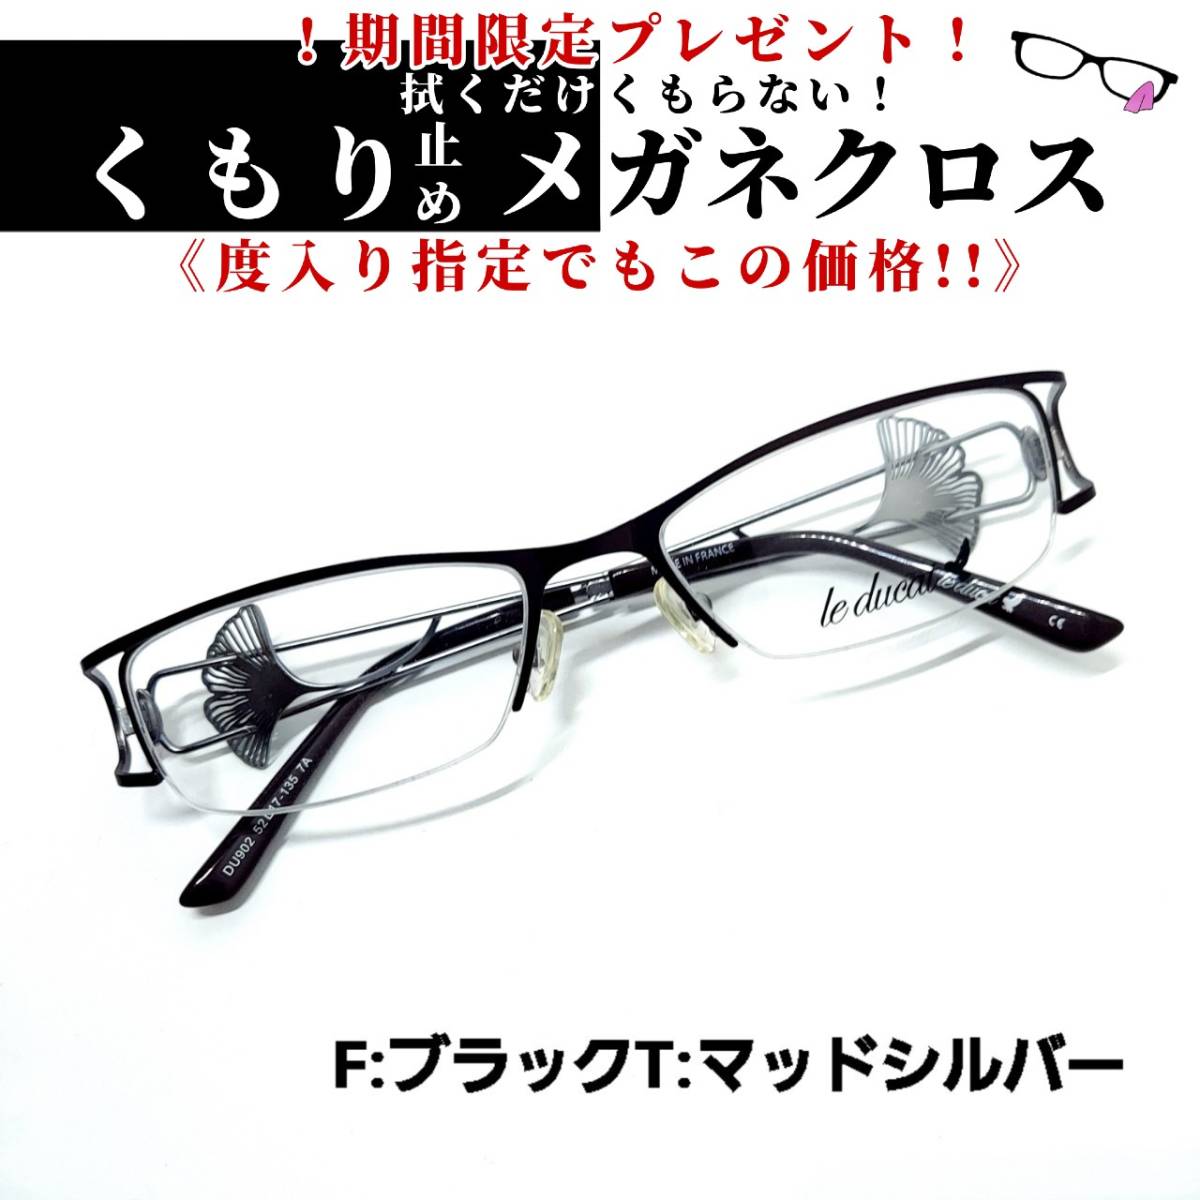 No.581+メガネ le ducat【度数入り込み価格】 最新のデザイン 3480円